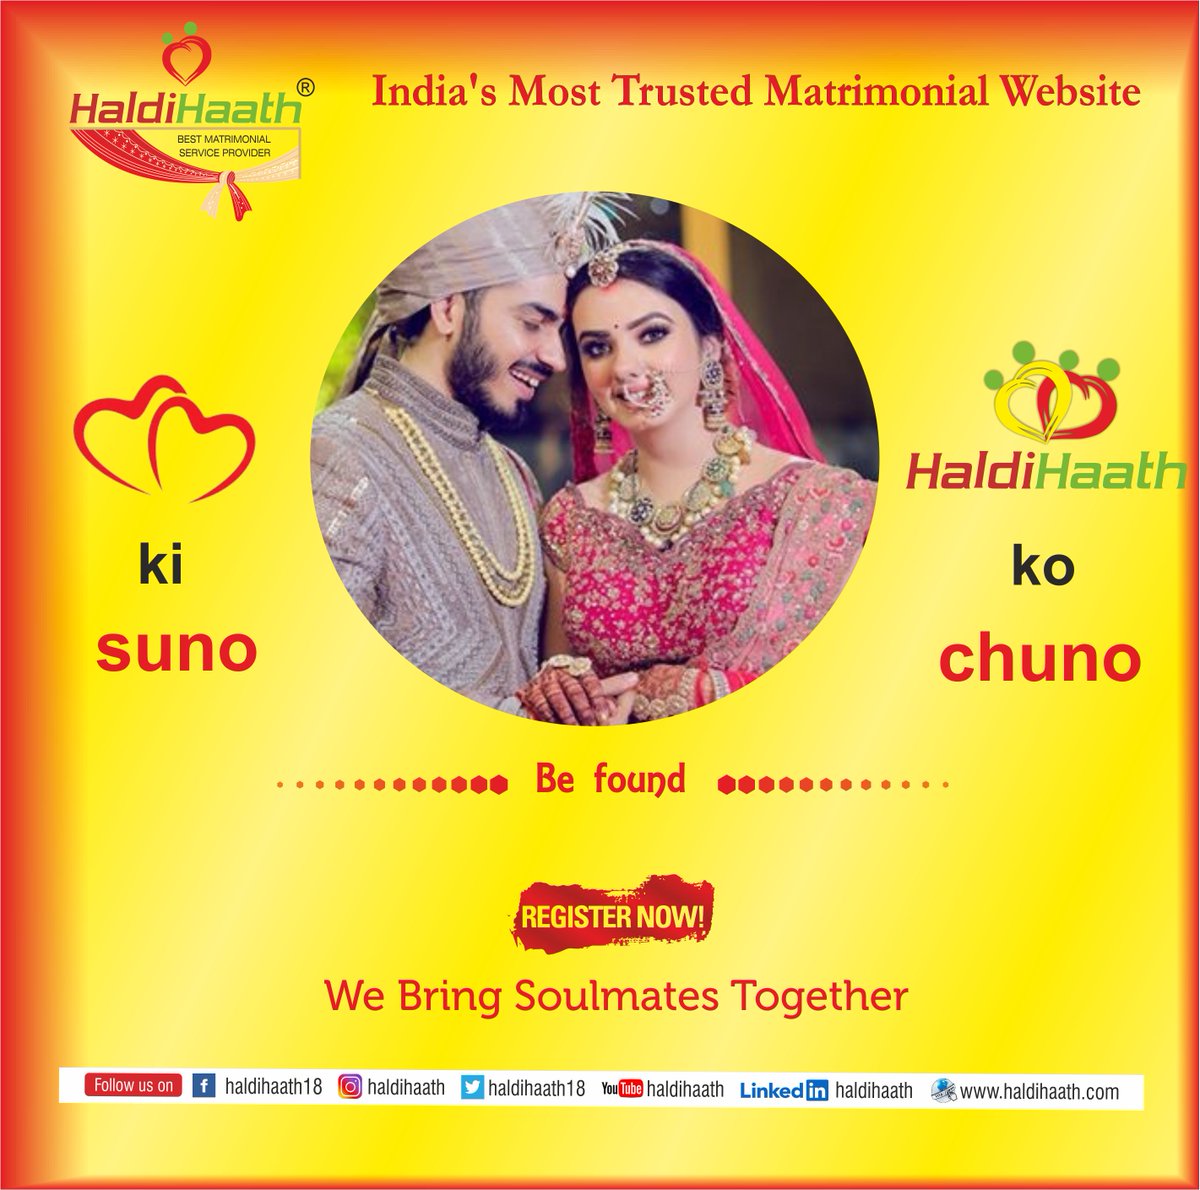 Dilki suno, HaldiHaath ko chuno.
Search your life Partner now.
Visit our website:
haldihaath.com
Get connect on Twitter:
twitter.com/haldihaath18
Connect us with Instagram
instagram.com/haldihaath/
#haldihaath #haldi #jeewanshaadi #lifepartner #marriage #partnerforlife